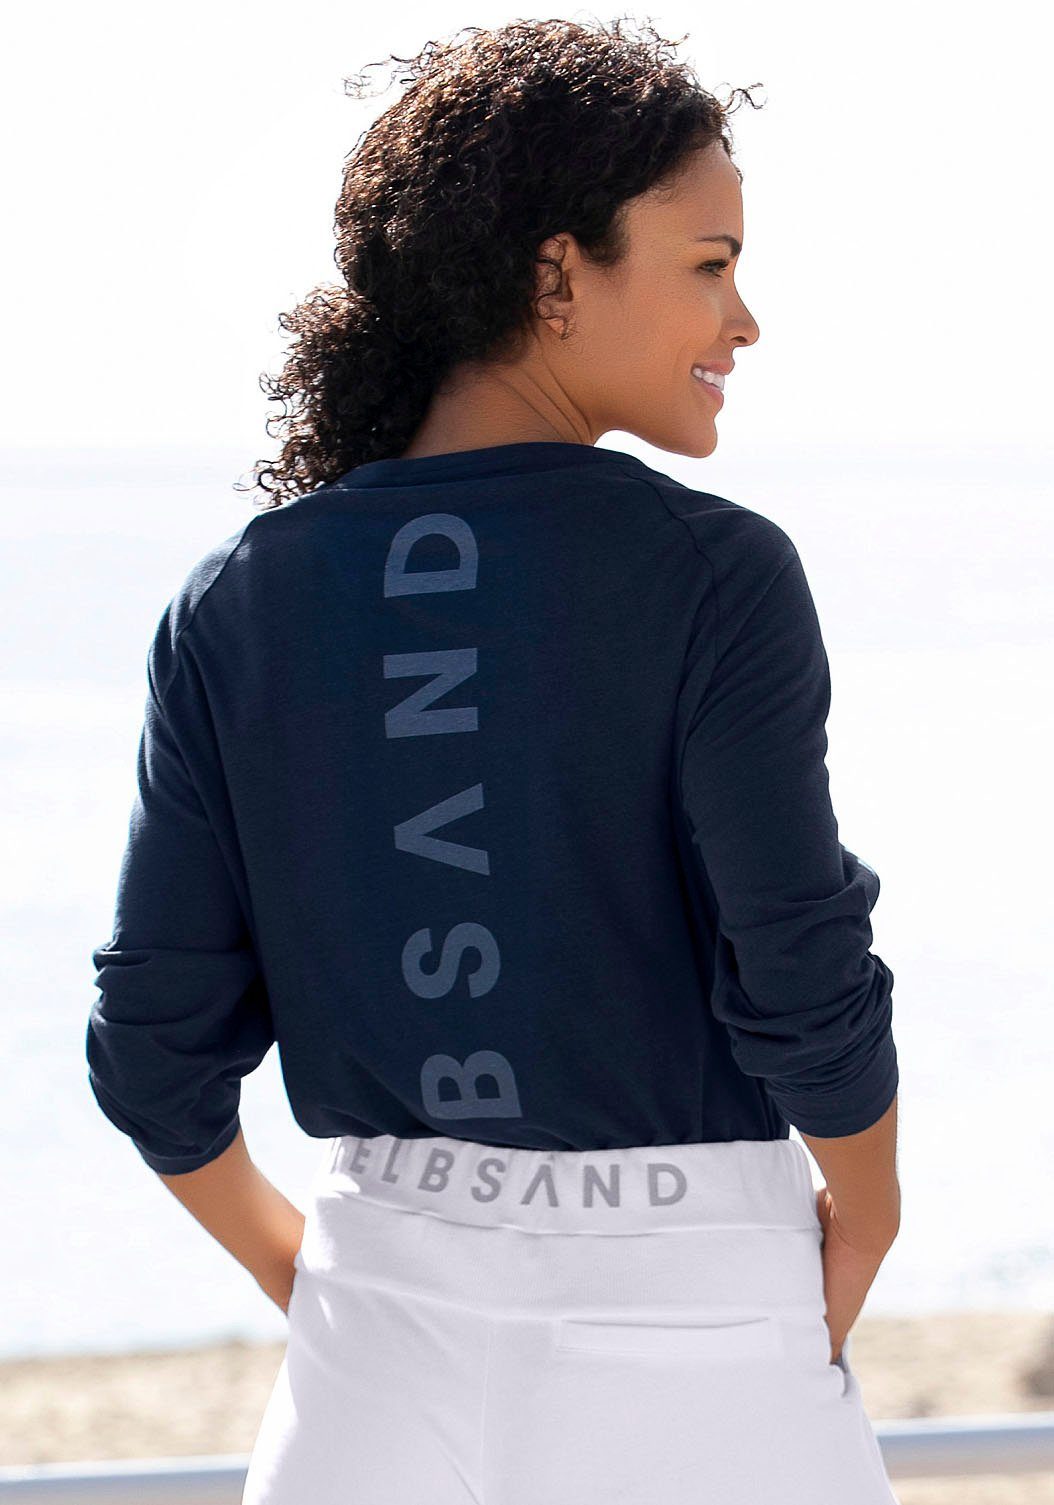 Elbsand Longsleeve Tinna mit Logodruck hinten, Langarmshirt aus Baumwoll-Mix, sportlich-casual marine